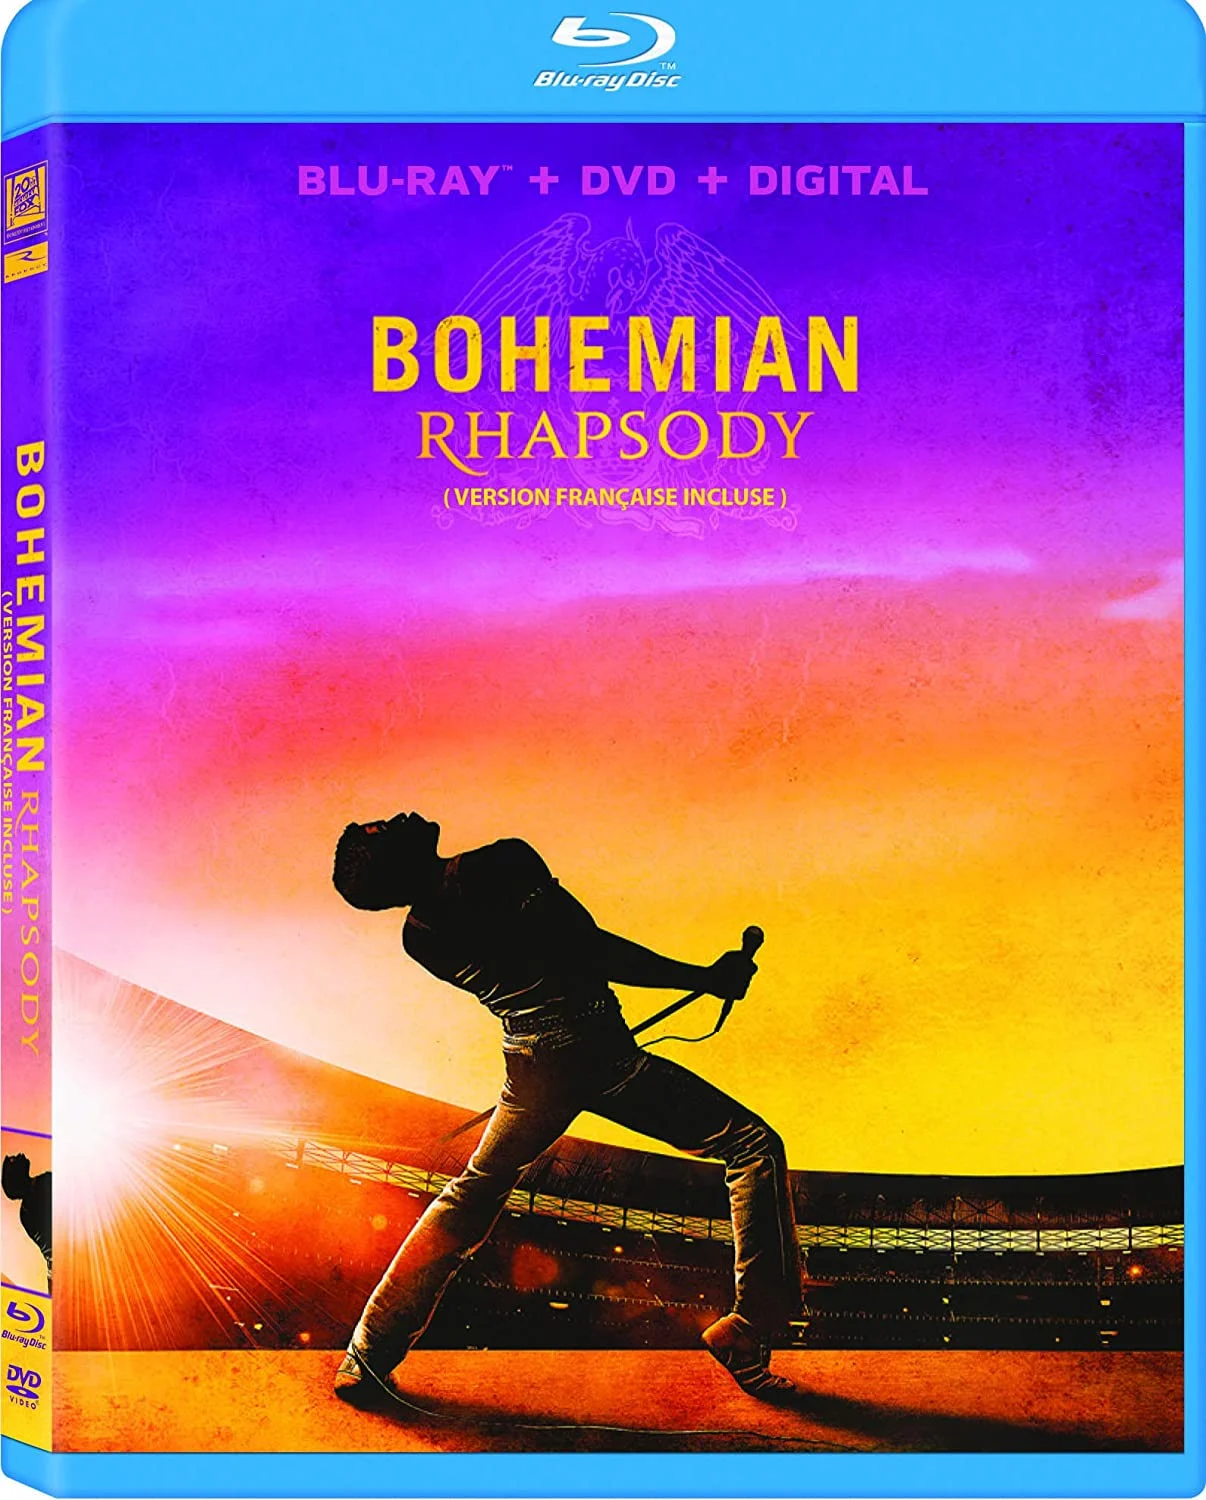 Bohemian Rhapsody (Blu-ray/DVD Combo) on MovieShack